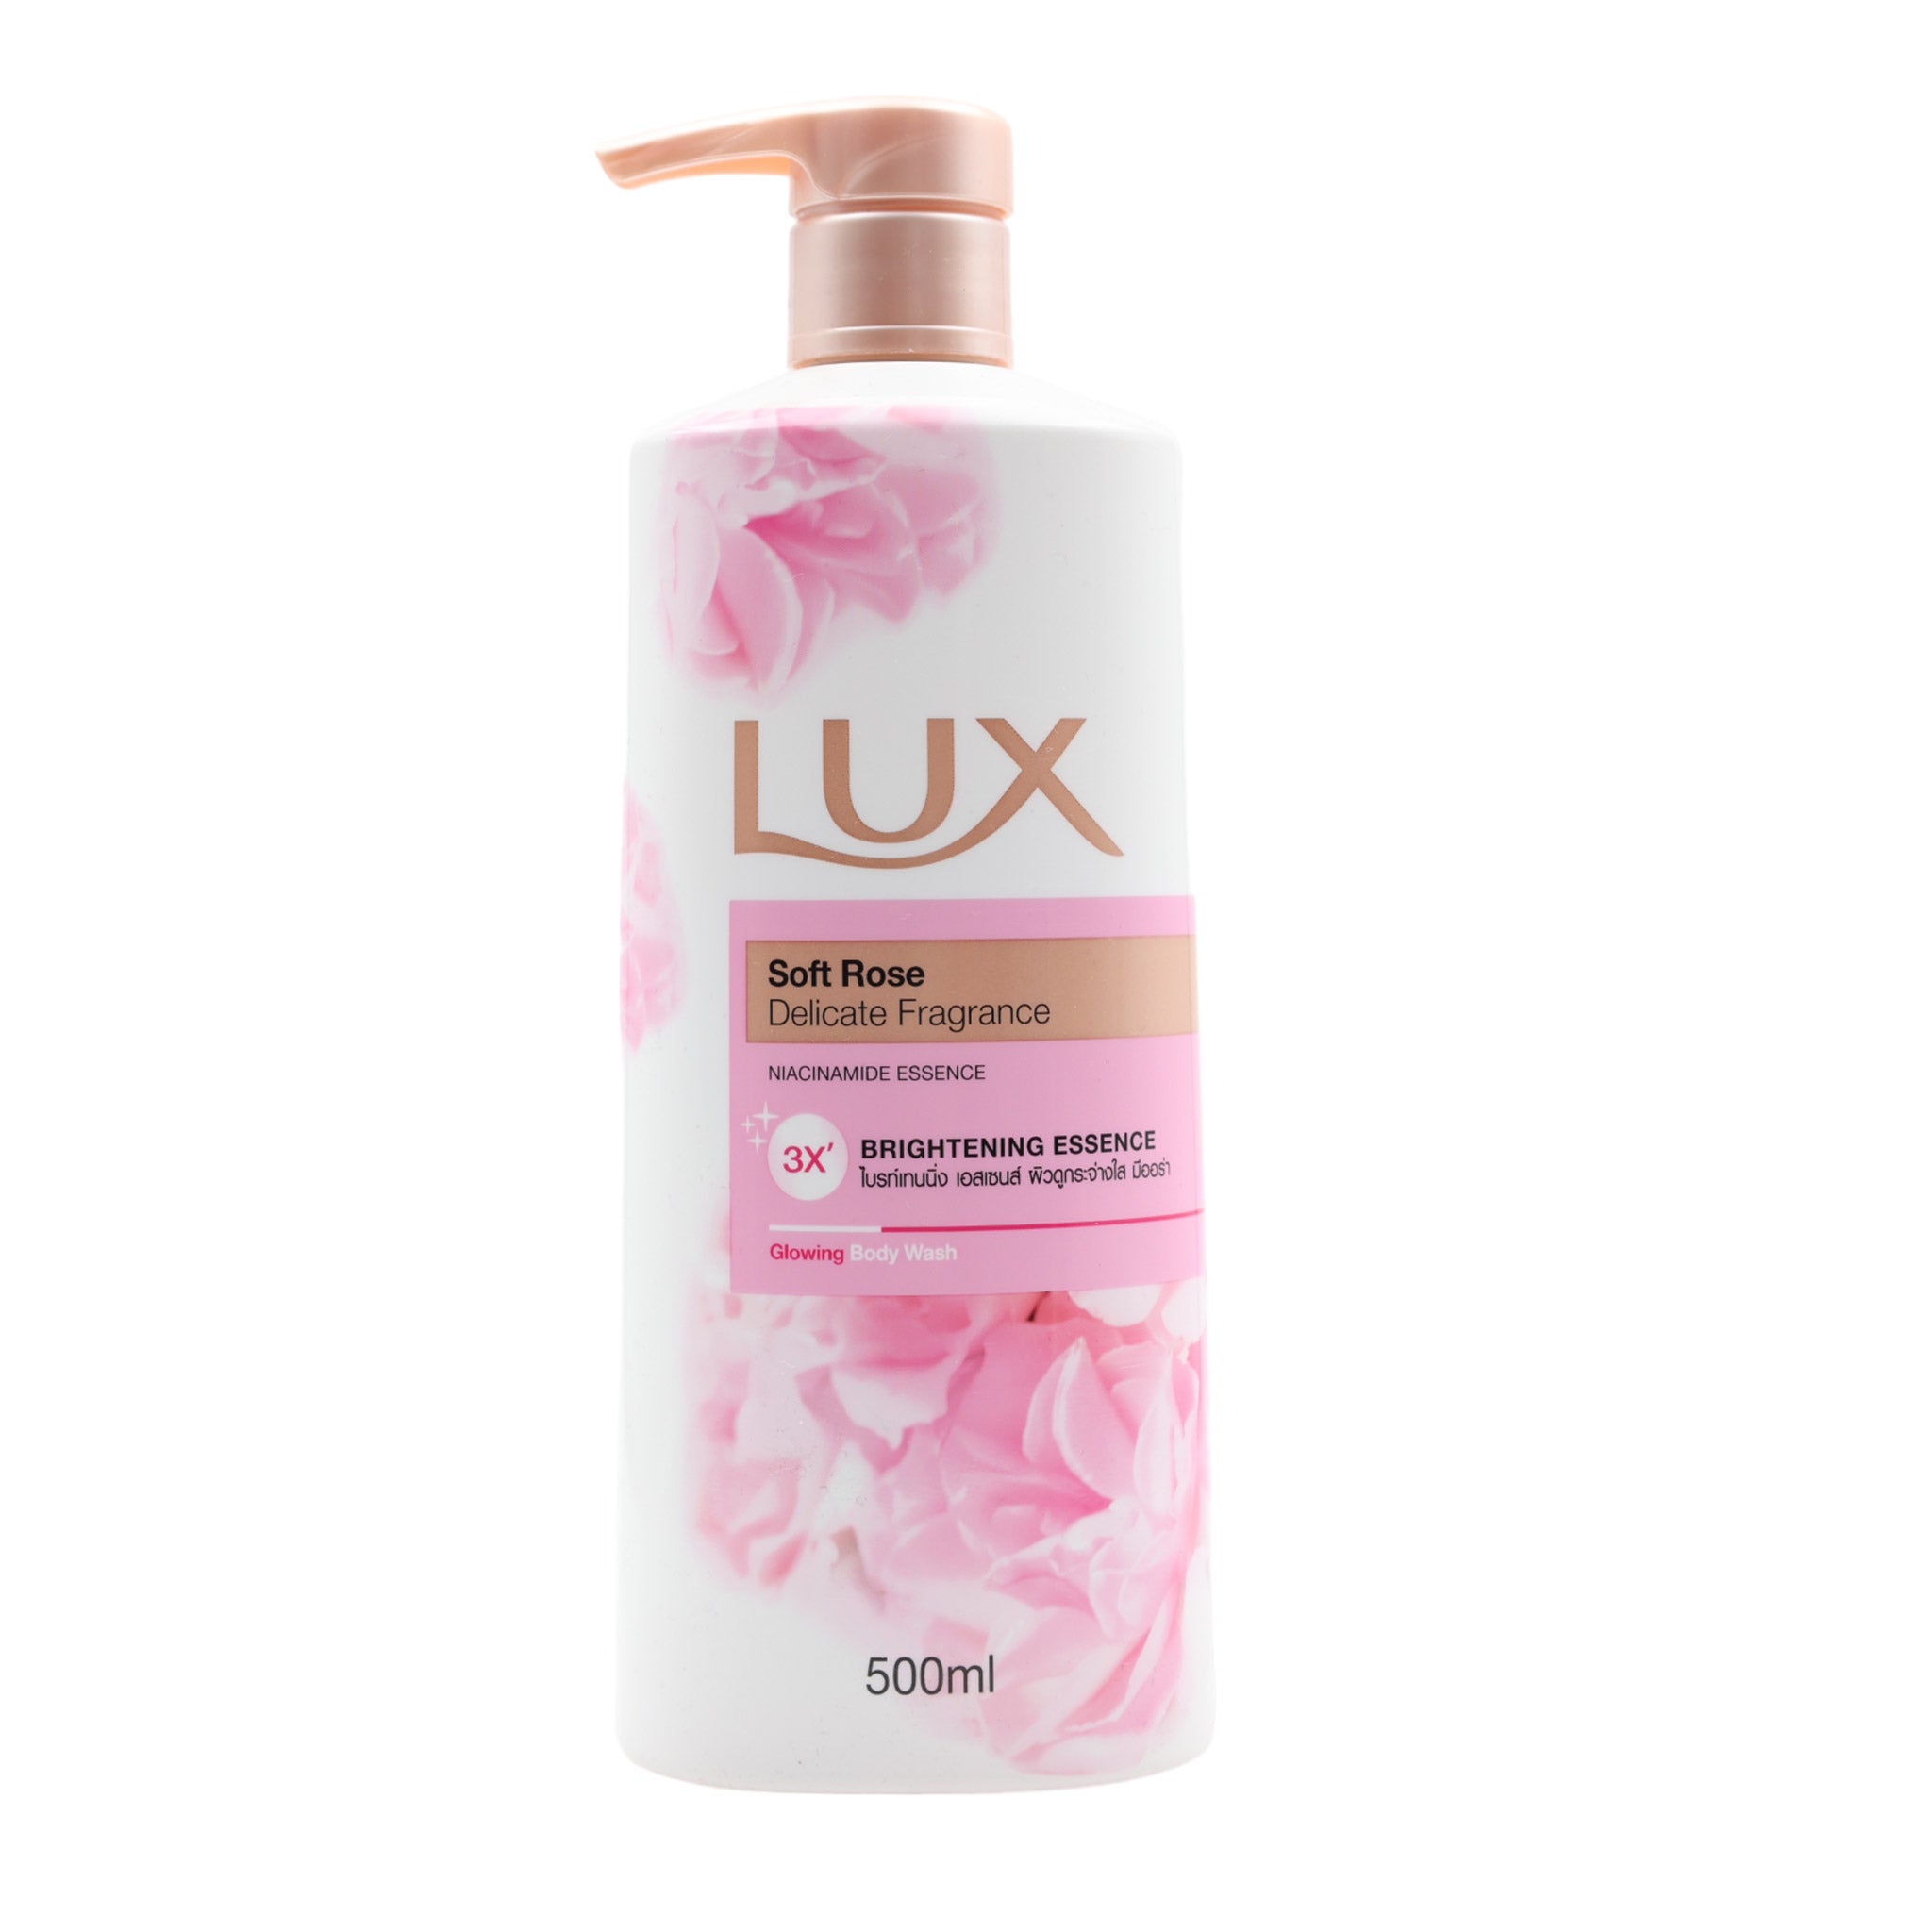 LUX Soft Rose Body Wash 500ml